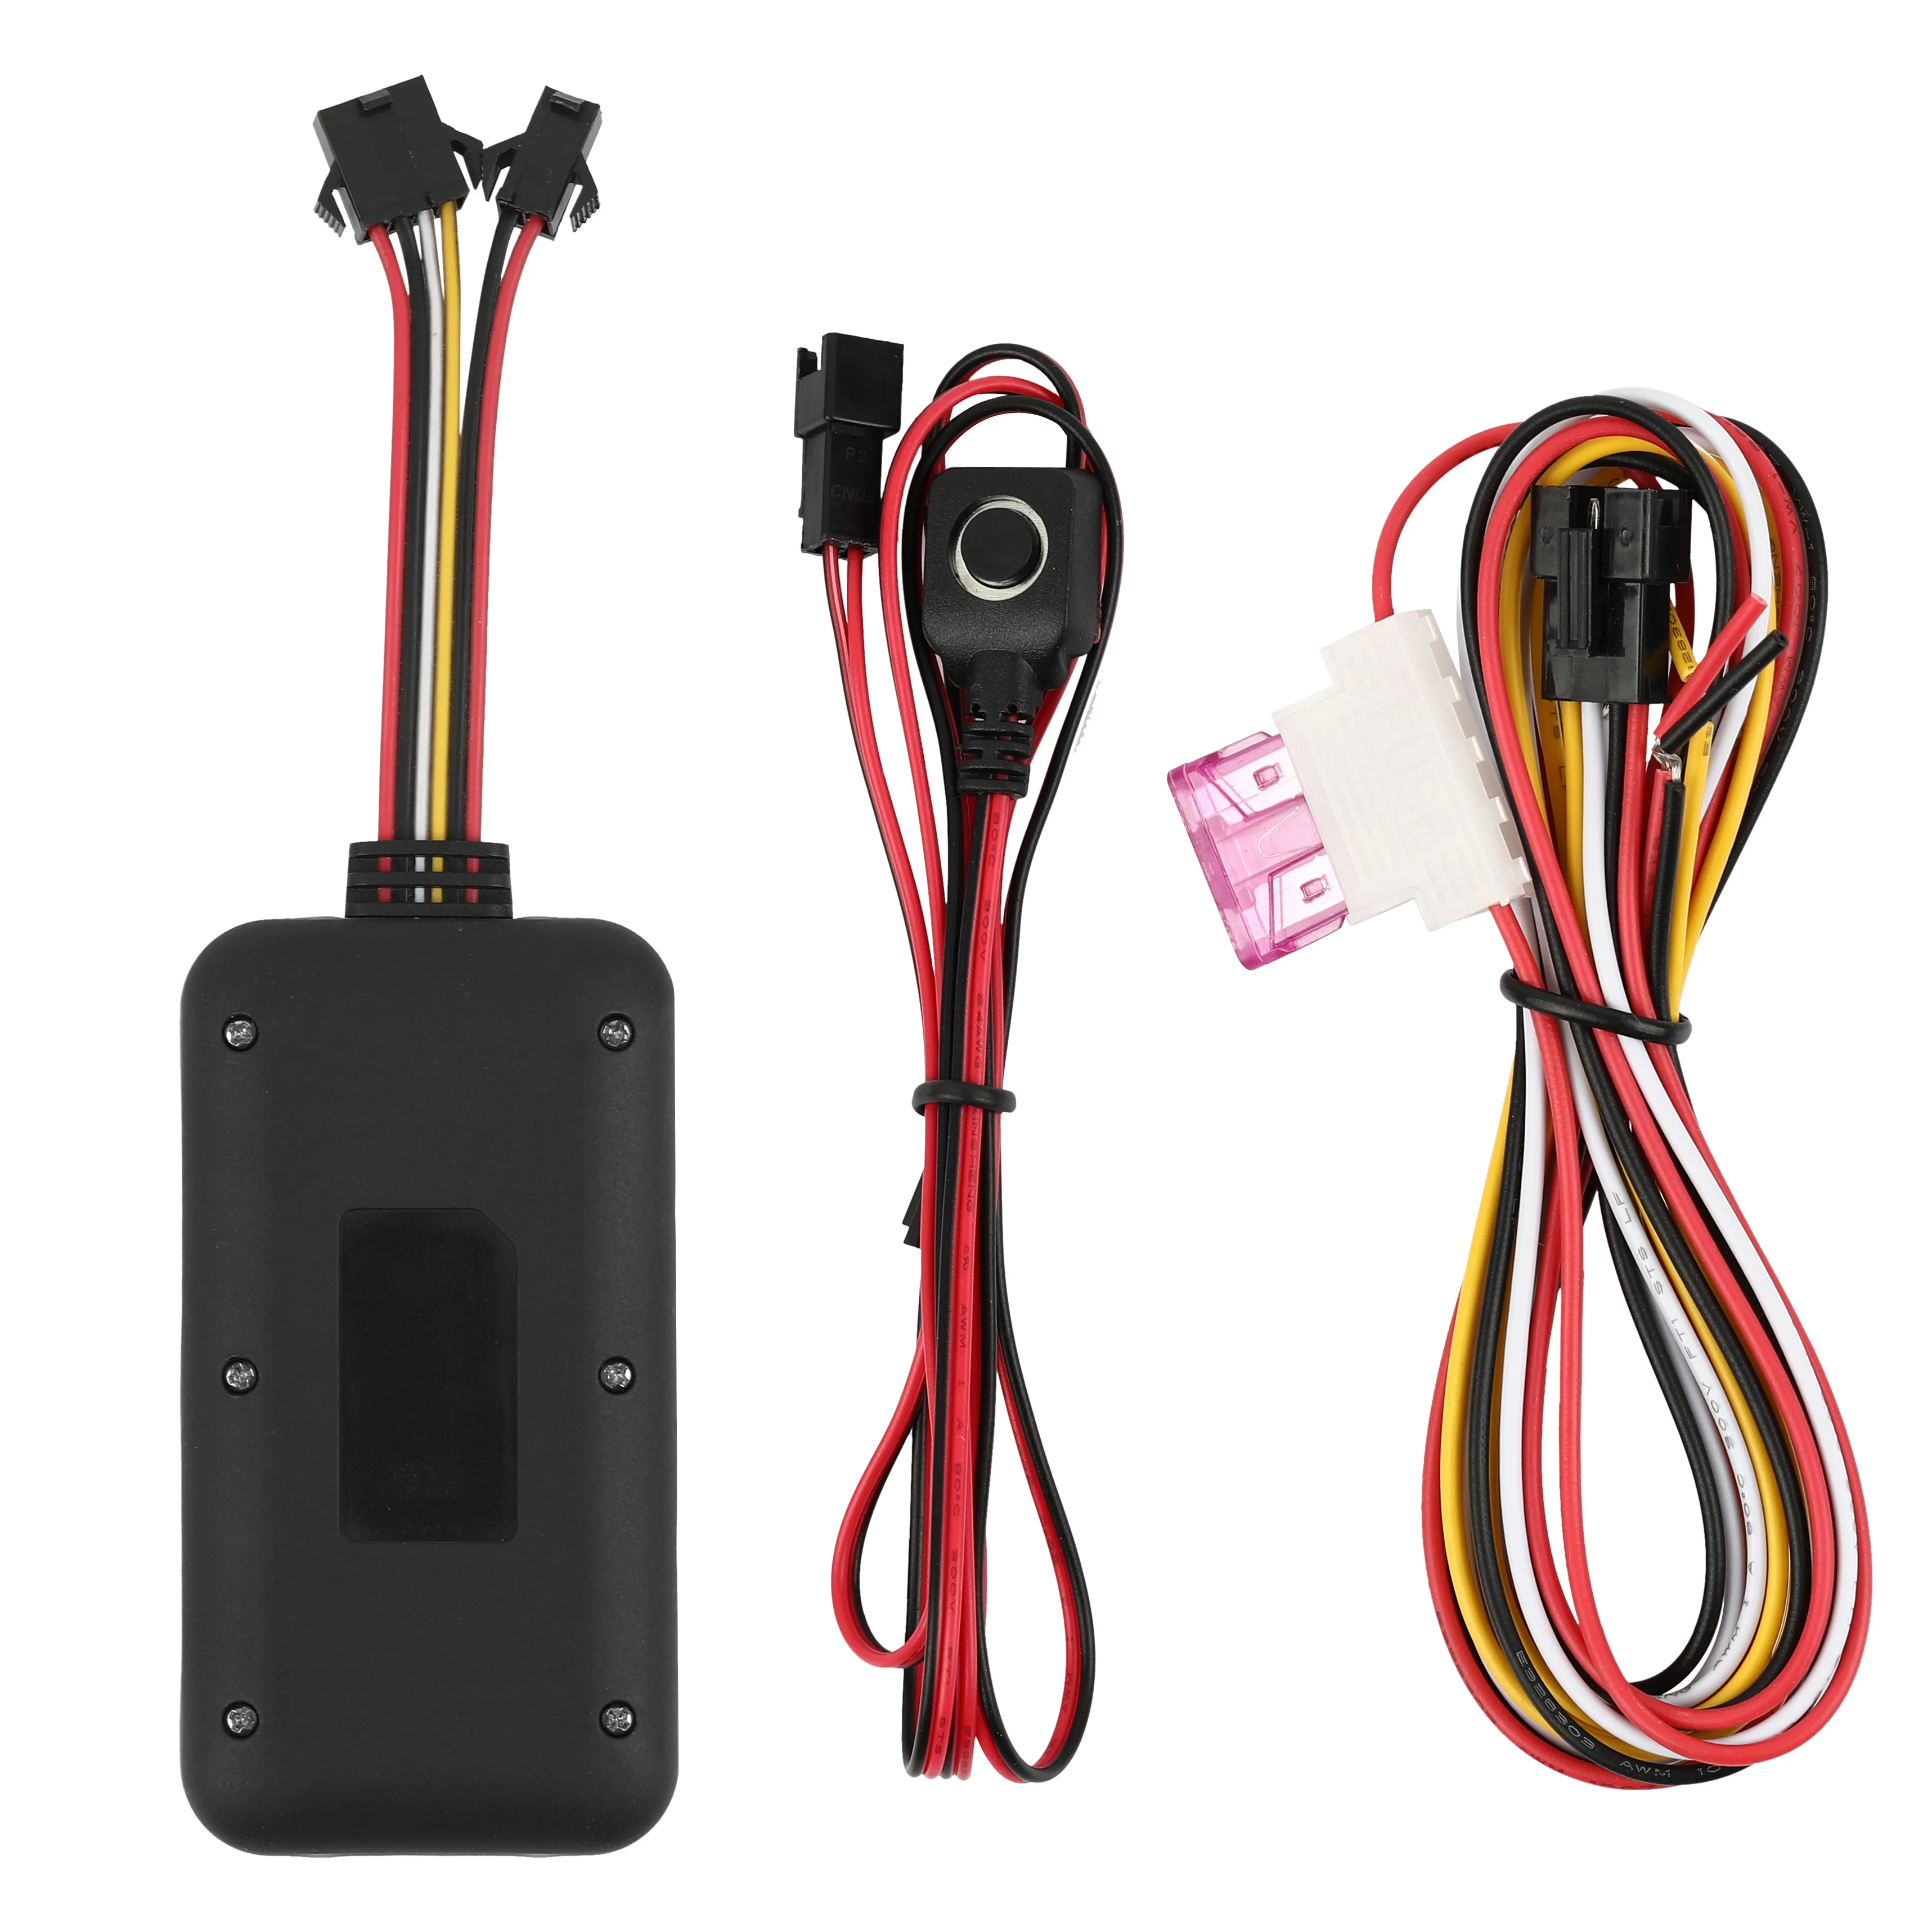 4G catm1 mini car  GPS tracker with voice surveillance